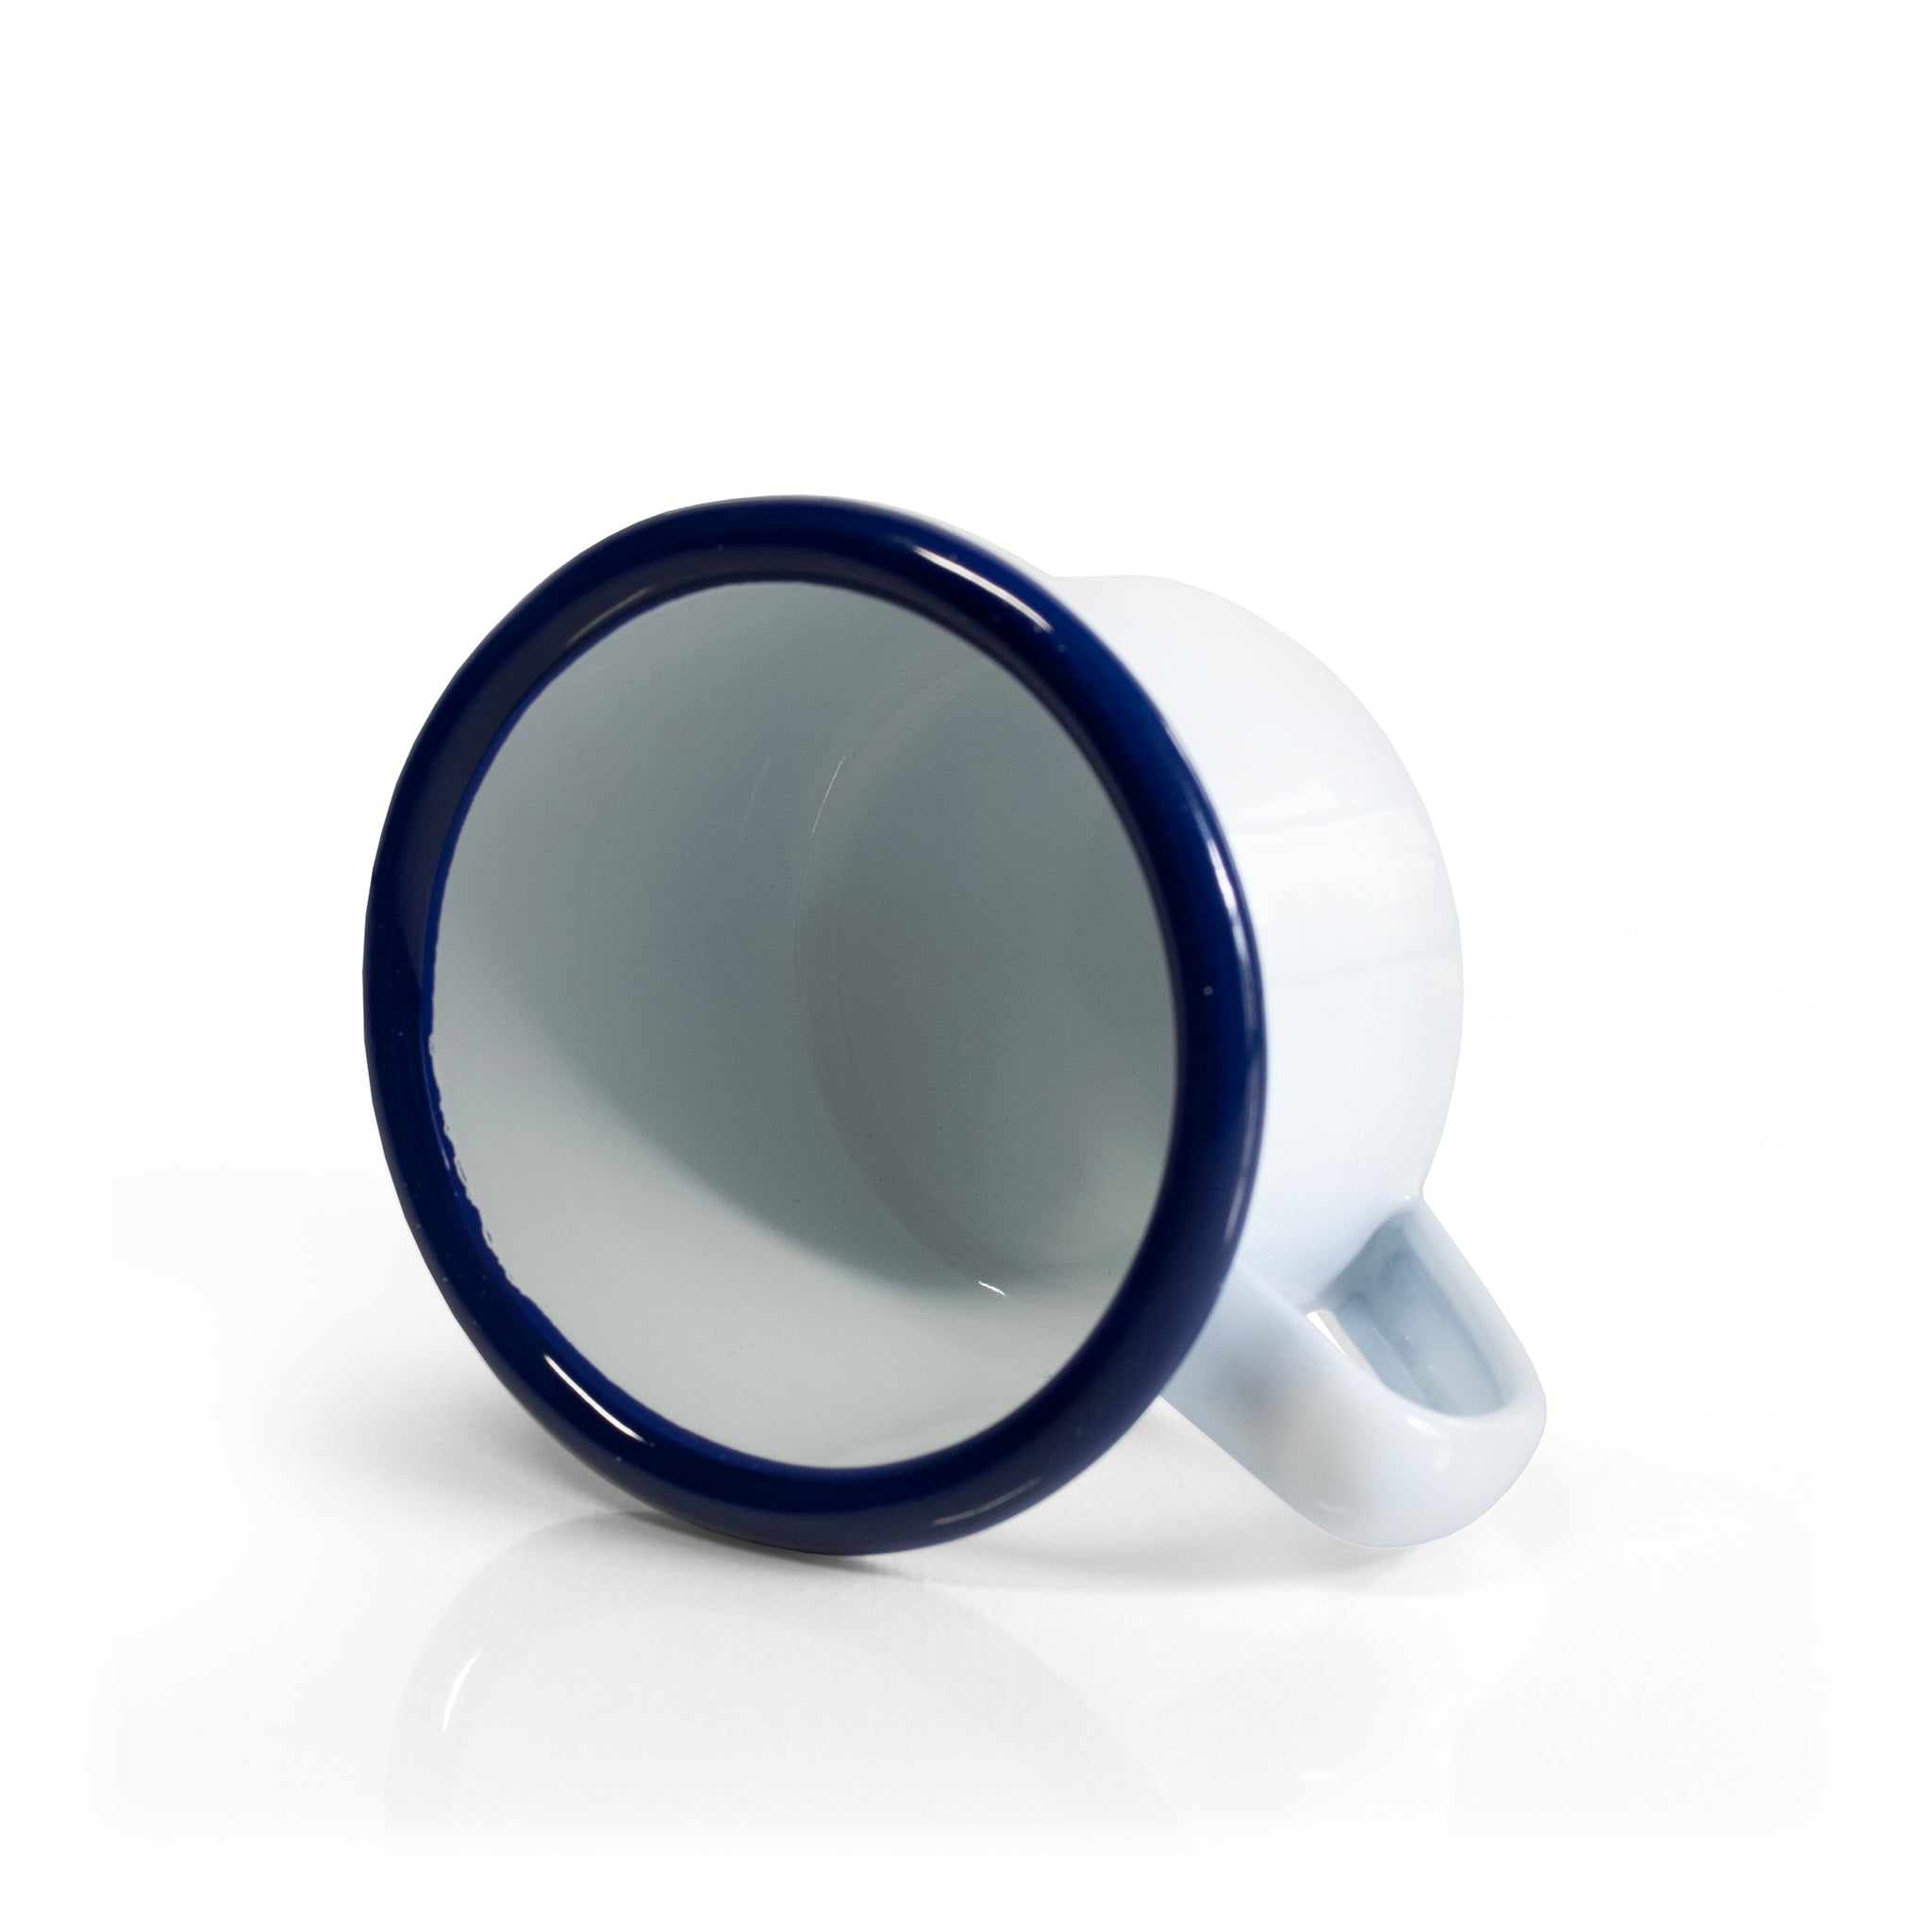 Enamel espresso cup white with blue rim